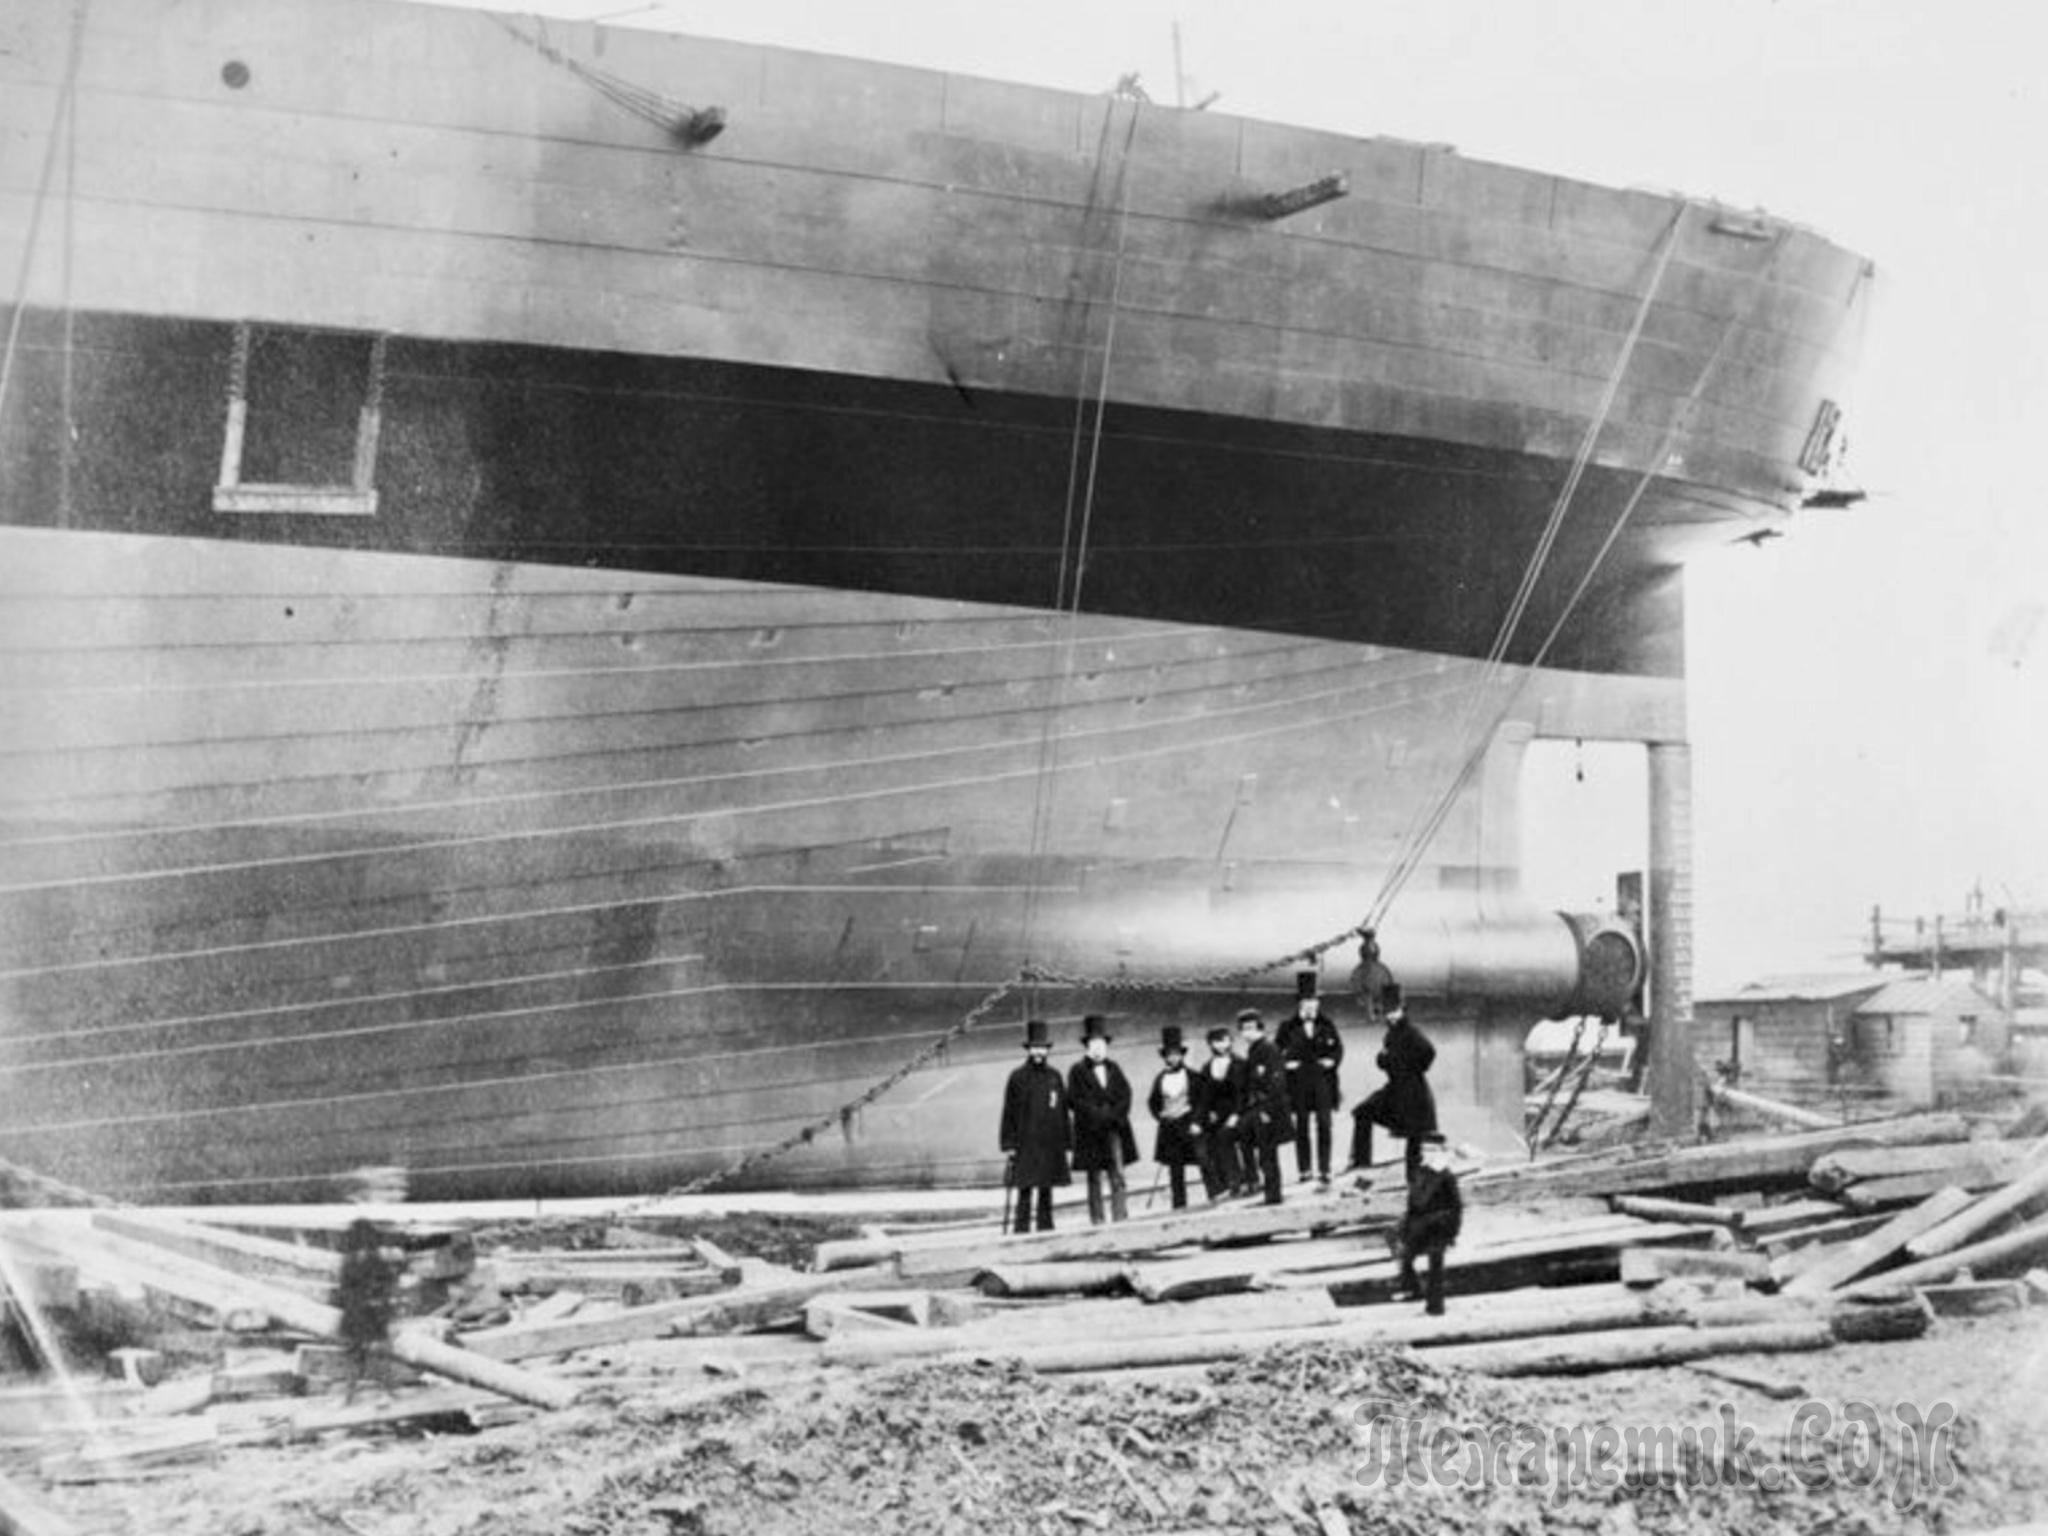 Грейт истерн. Грейт Истерн корабль. Судно Левиафан Грейт Истерн. Самый большой корабль 19 века Левиафан. Британский пароход Грейт Истерн.